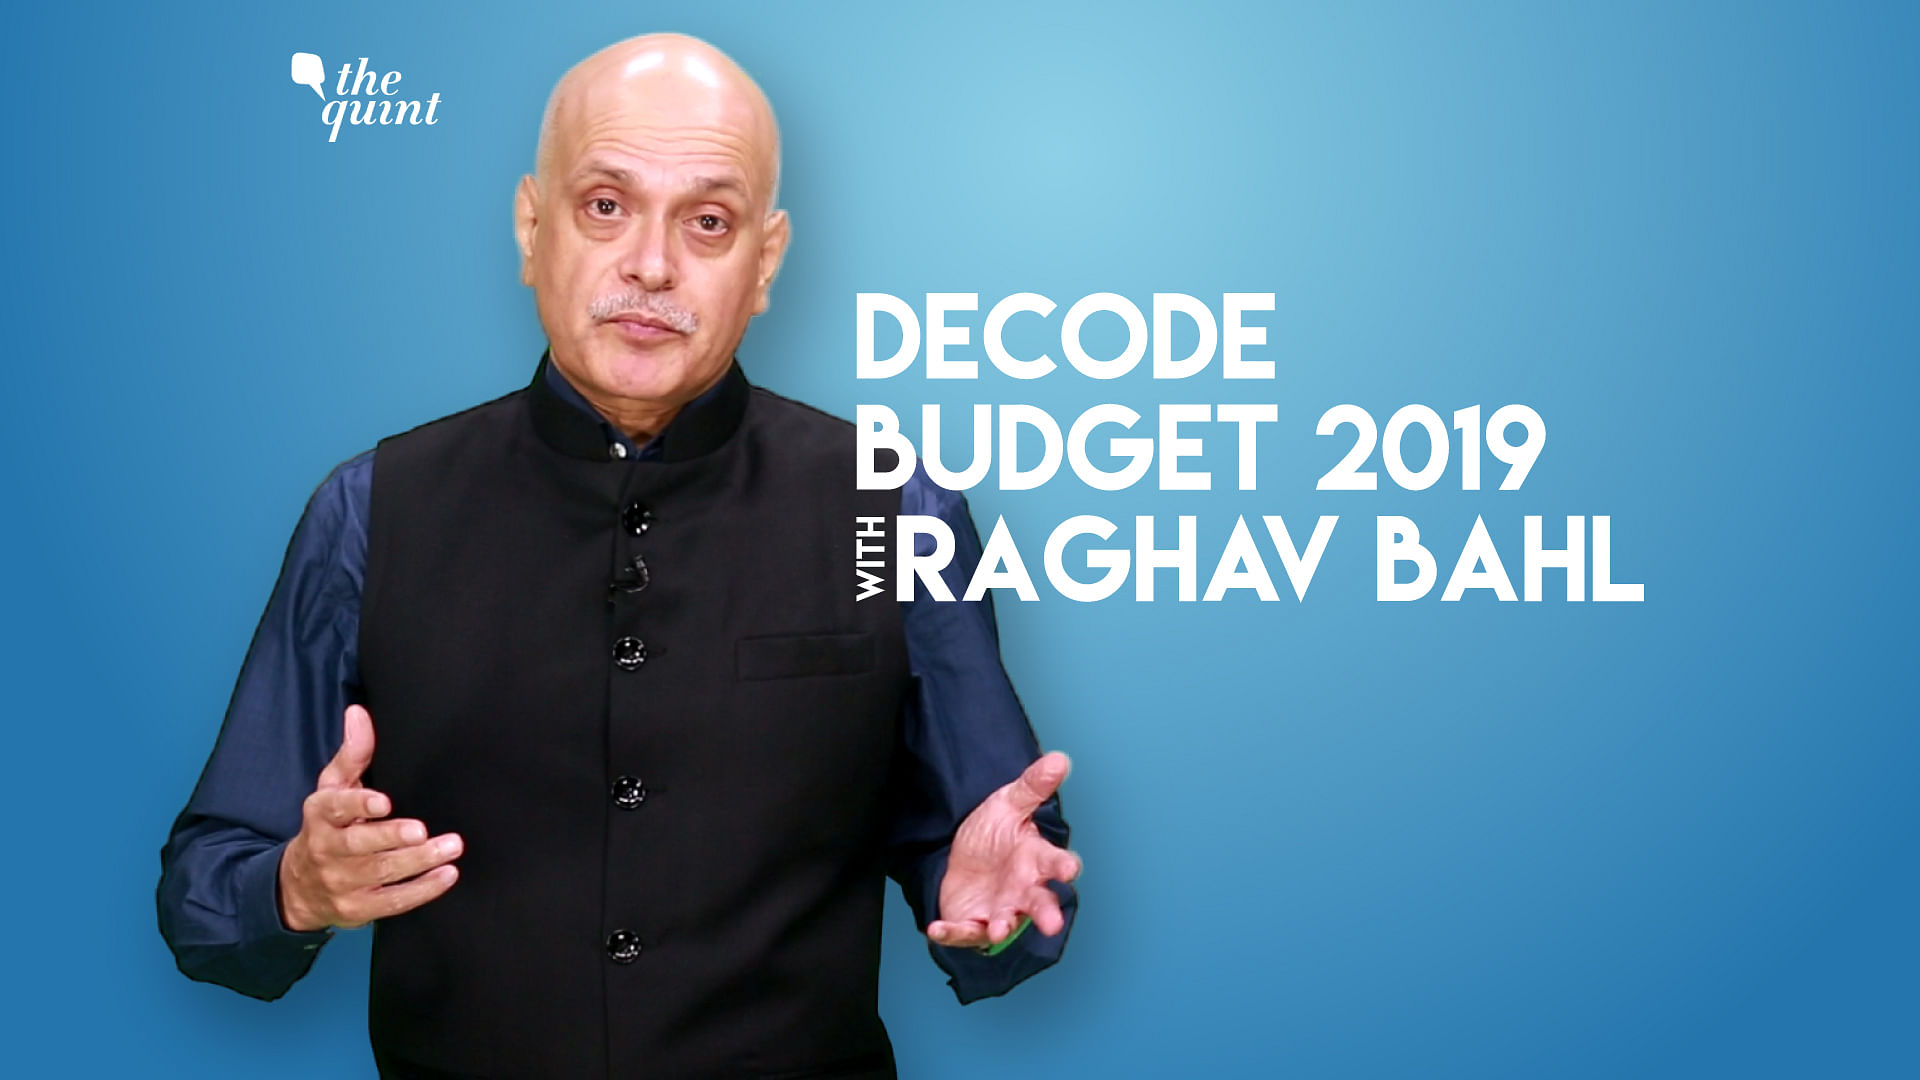 Decoding Budget 2019 with Raghav Bahl.